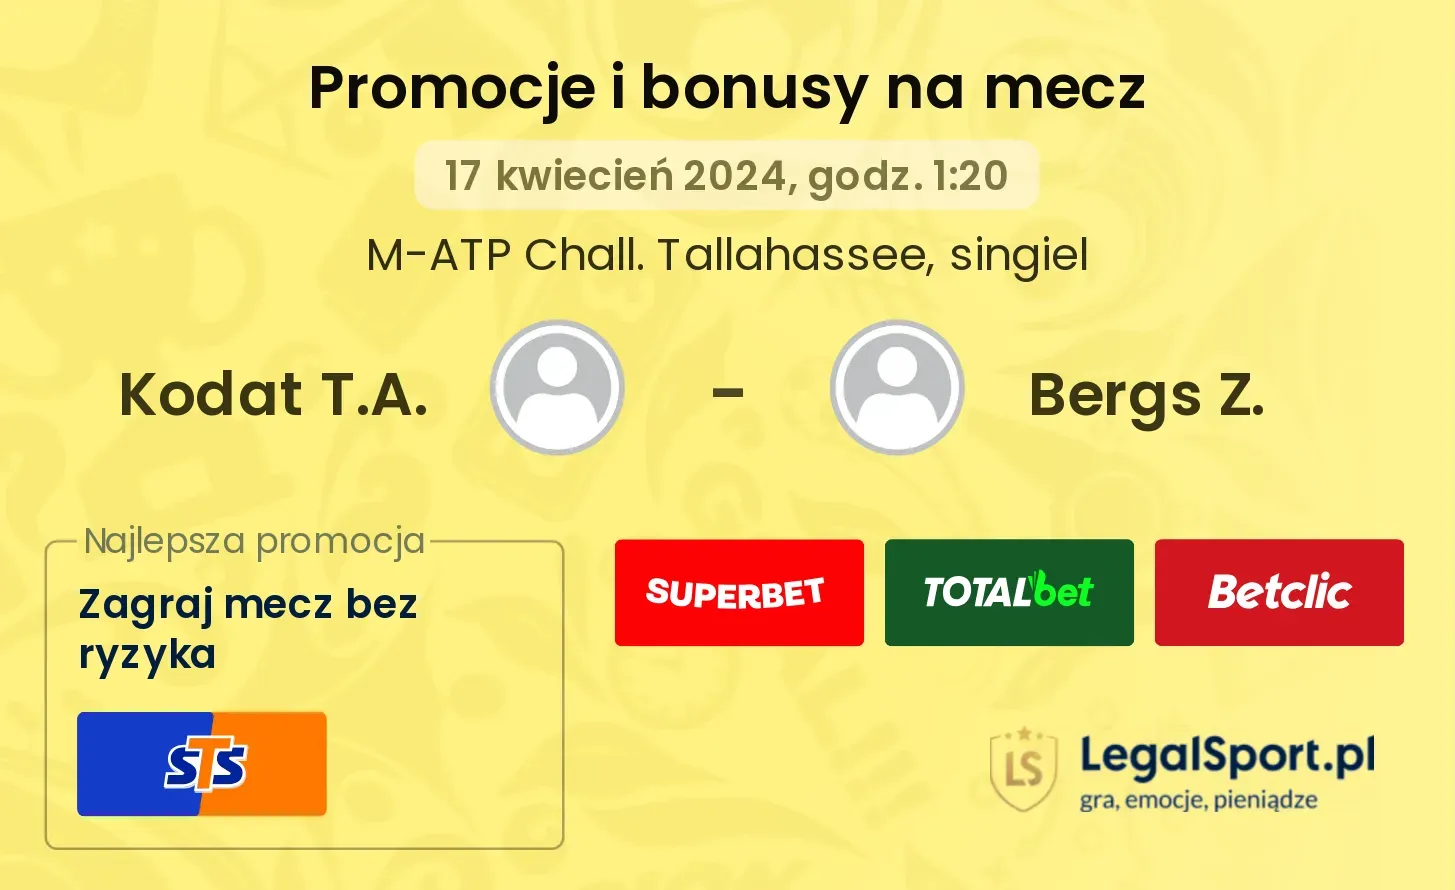 Kodat T.A. - Bergs Z. promocje bonusy na mecz